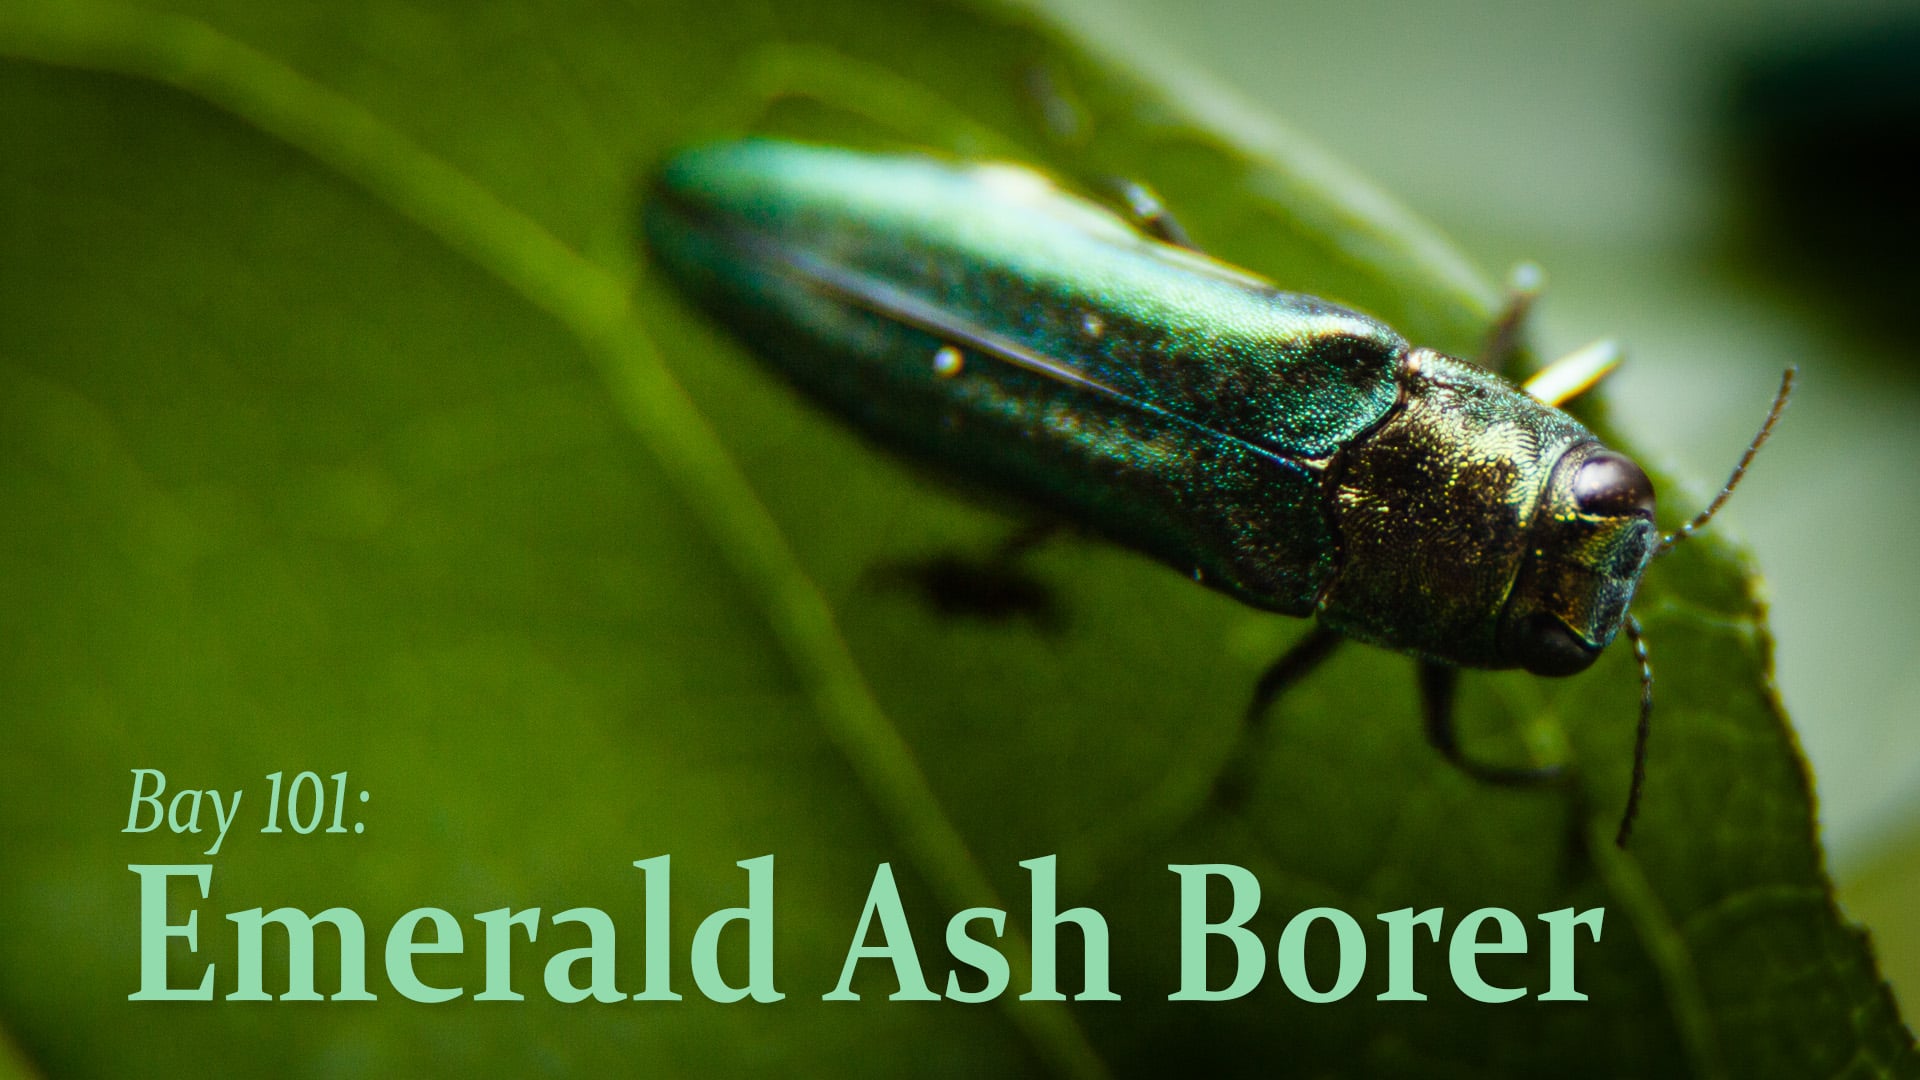 Bay 101: Emerald Ash Borer